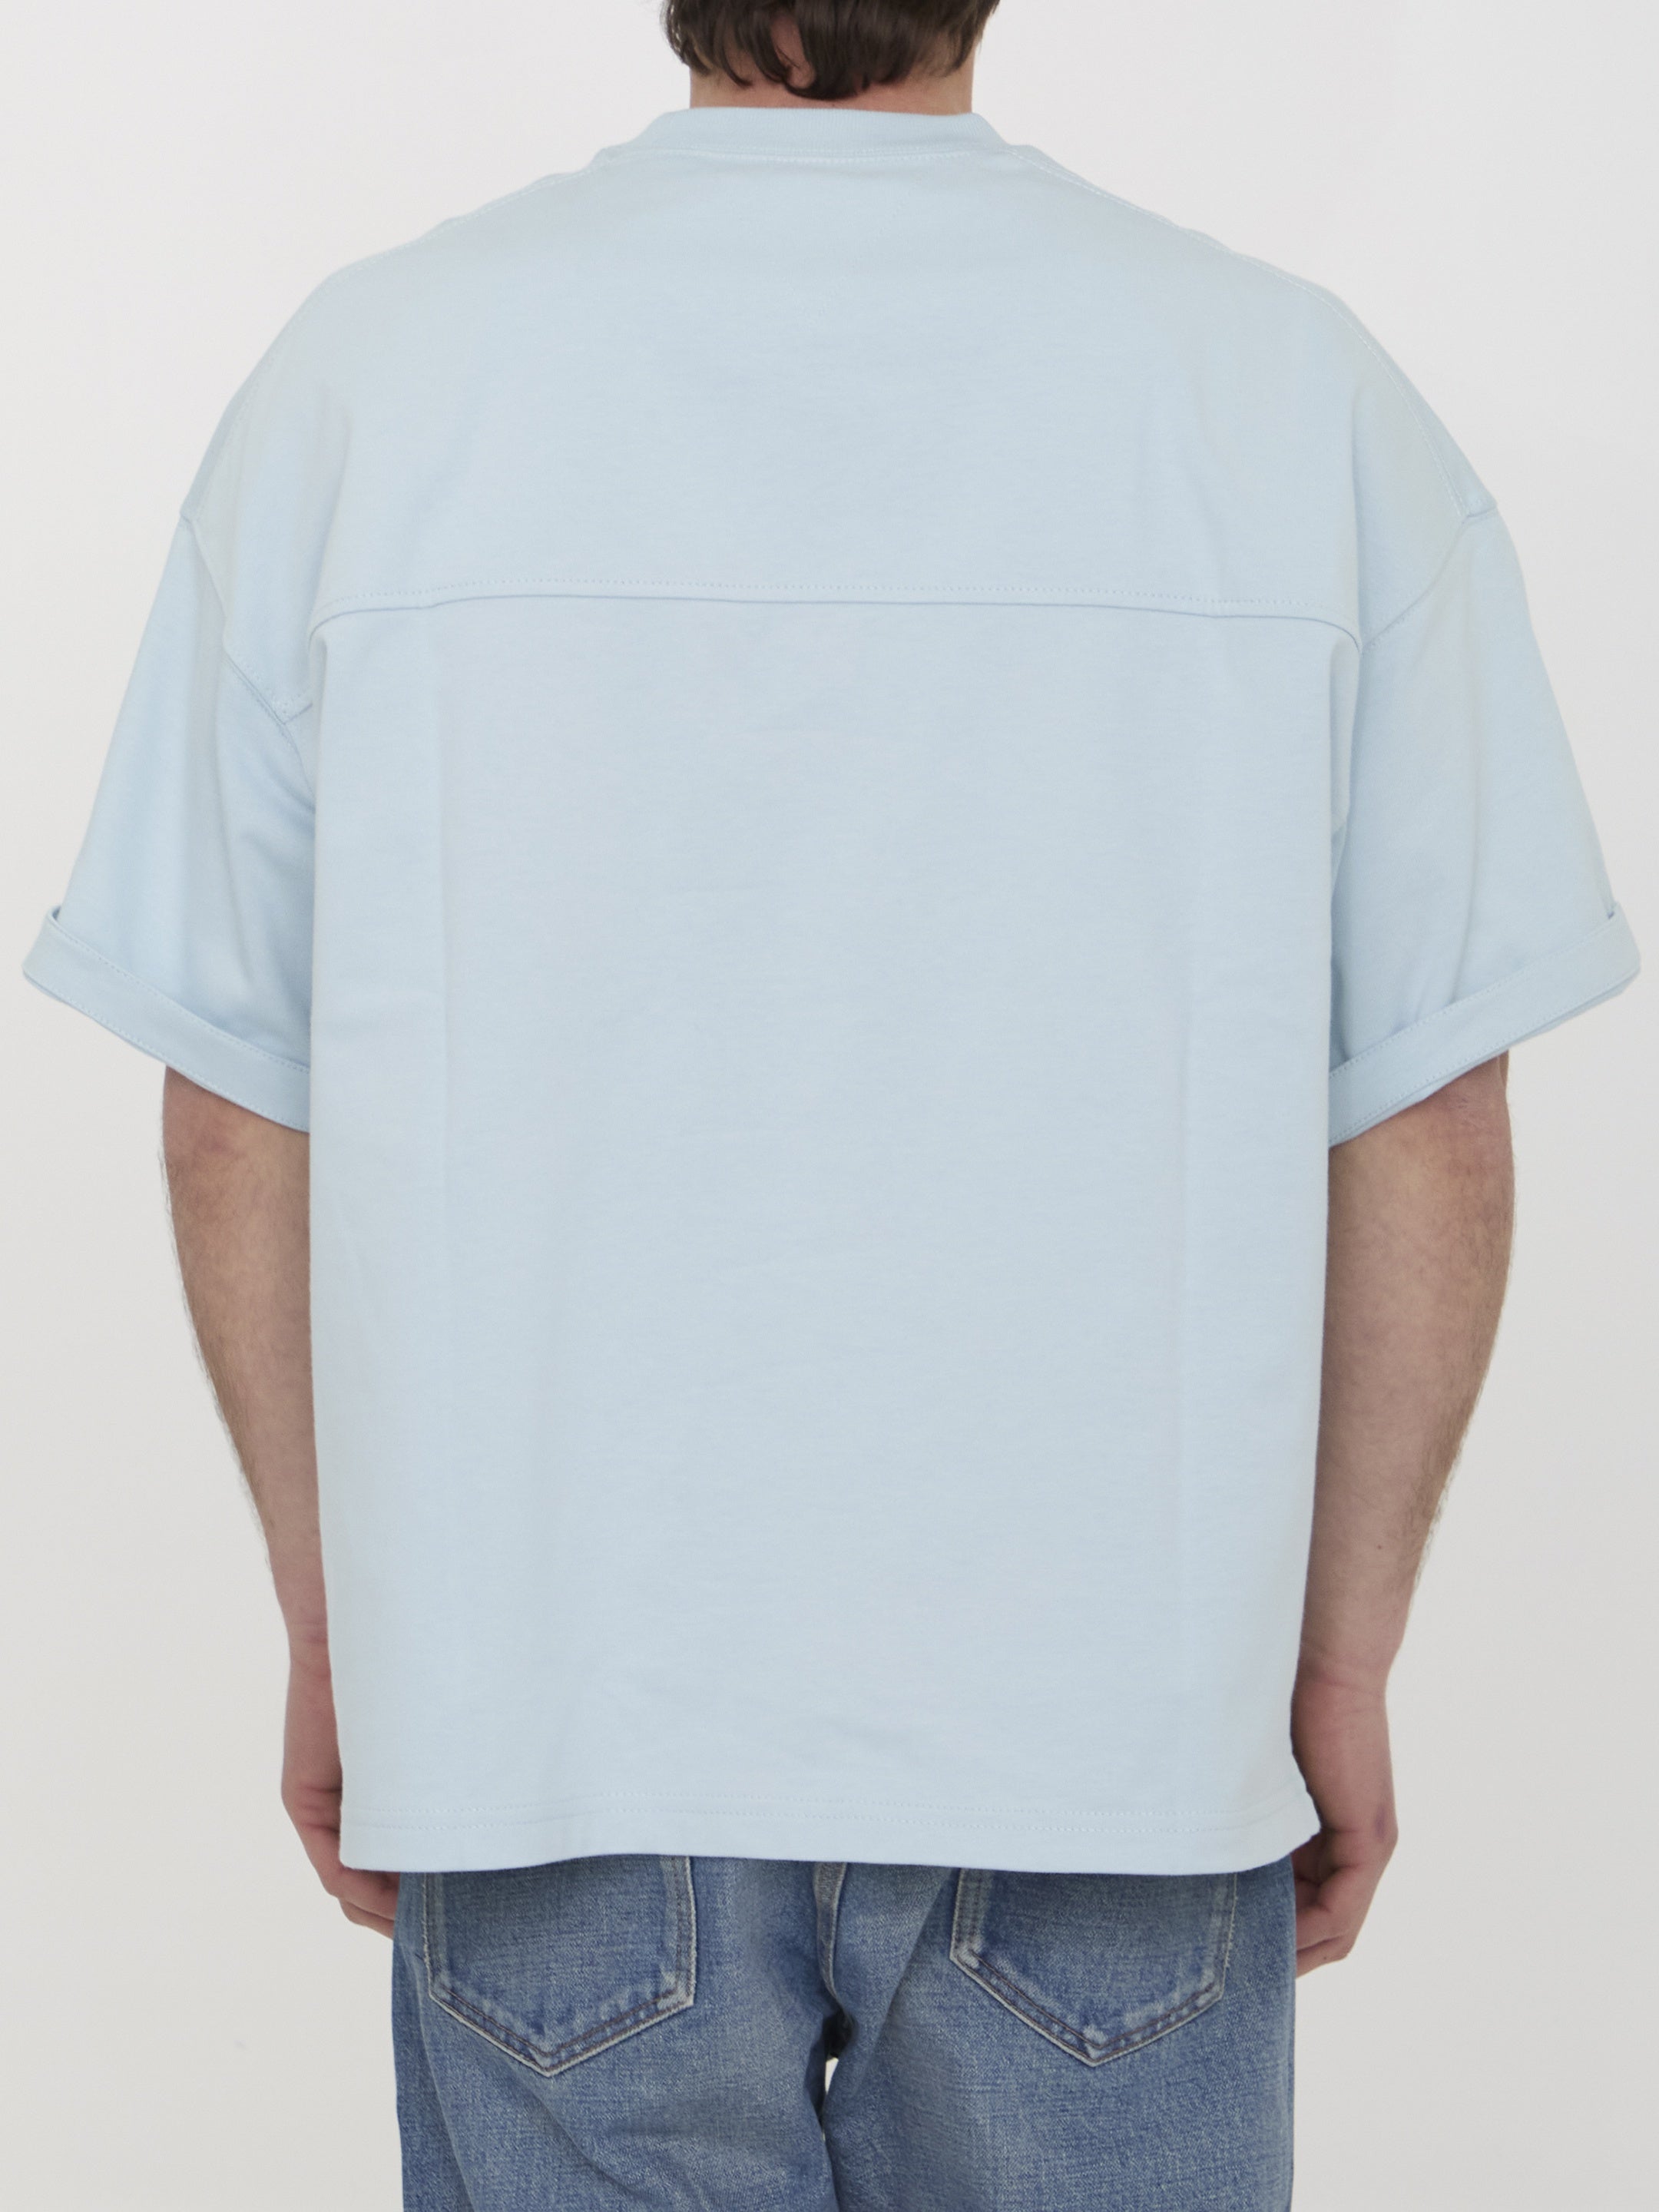 BOTTEGA-VENETA-OUTLET-SALE-Cotton-t-shirt-Shirts-ARCHIVE-COLLECTION-4_6672ffd0-f5b2-49b3-a7c3-827a046ea544.jpg